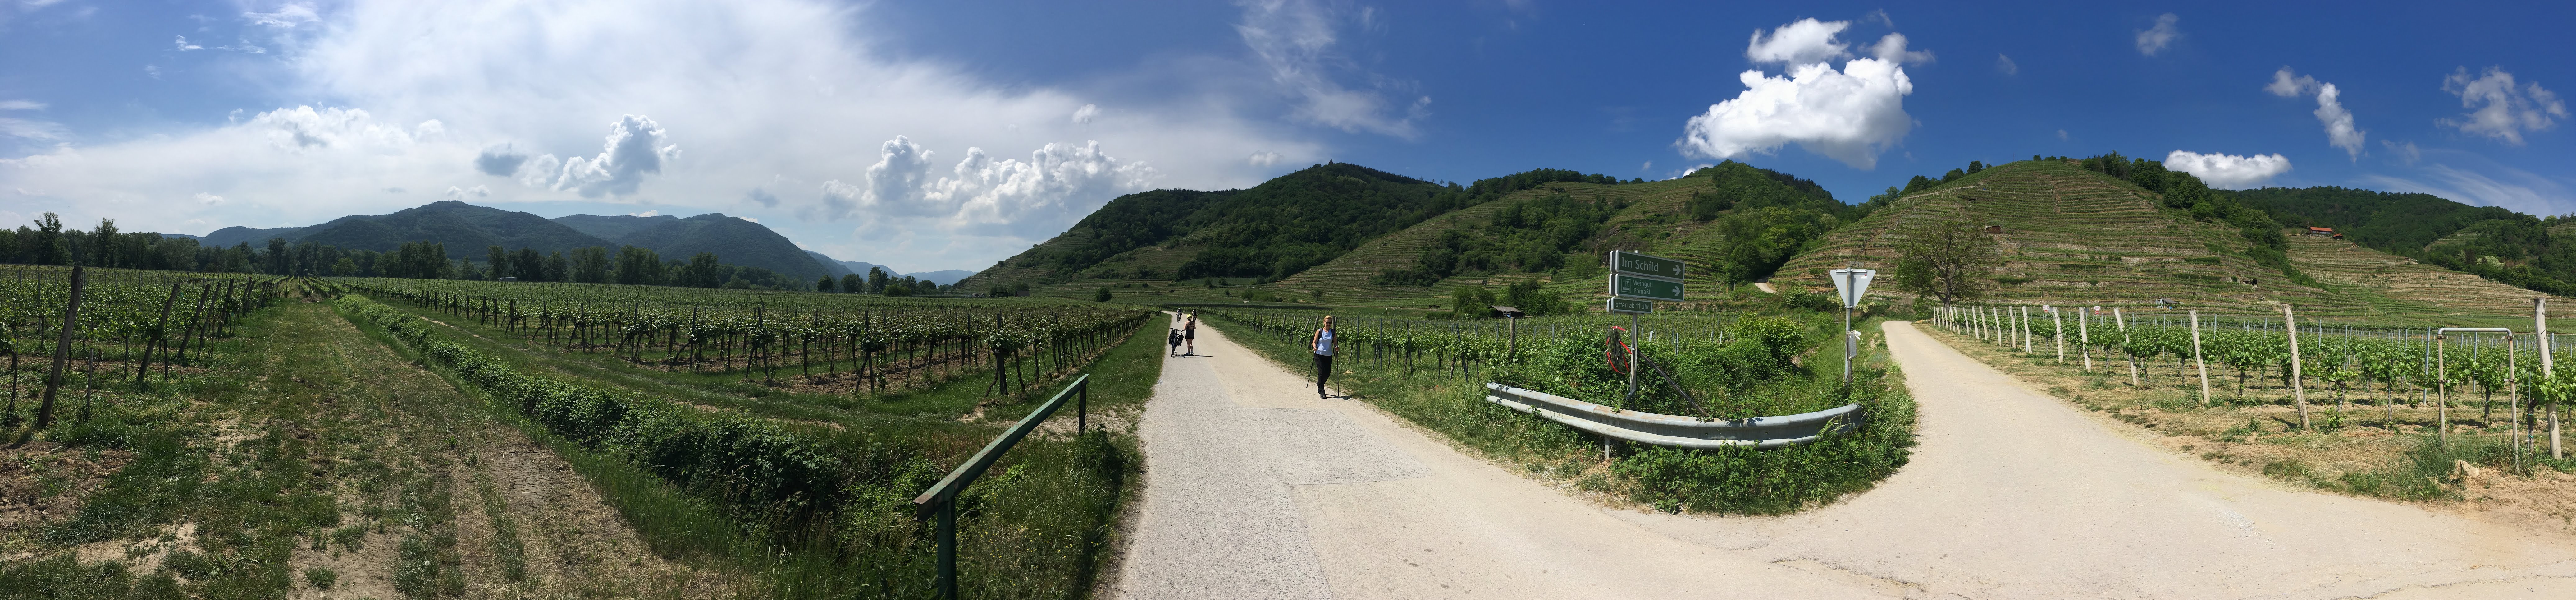 The Vineyards of Wachau Valley